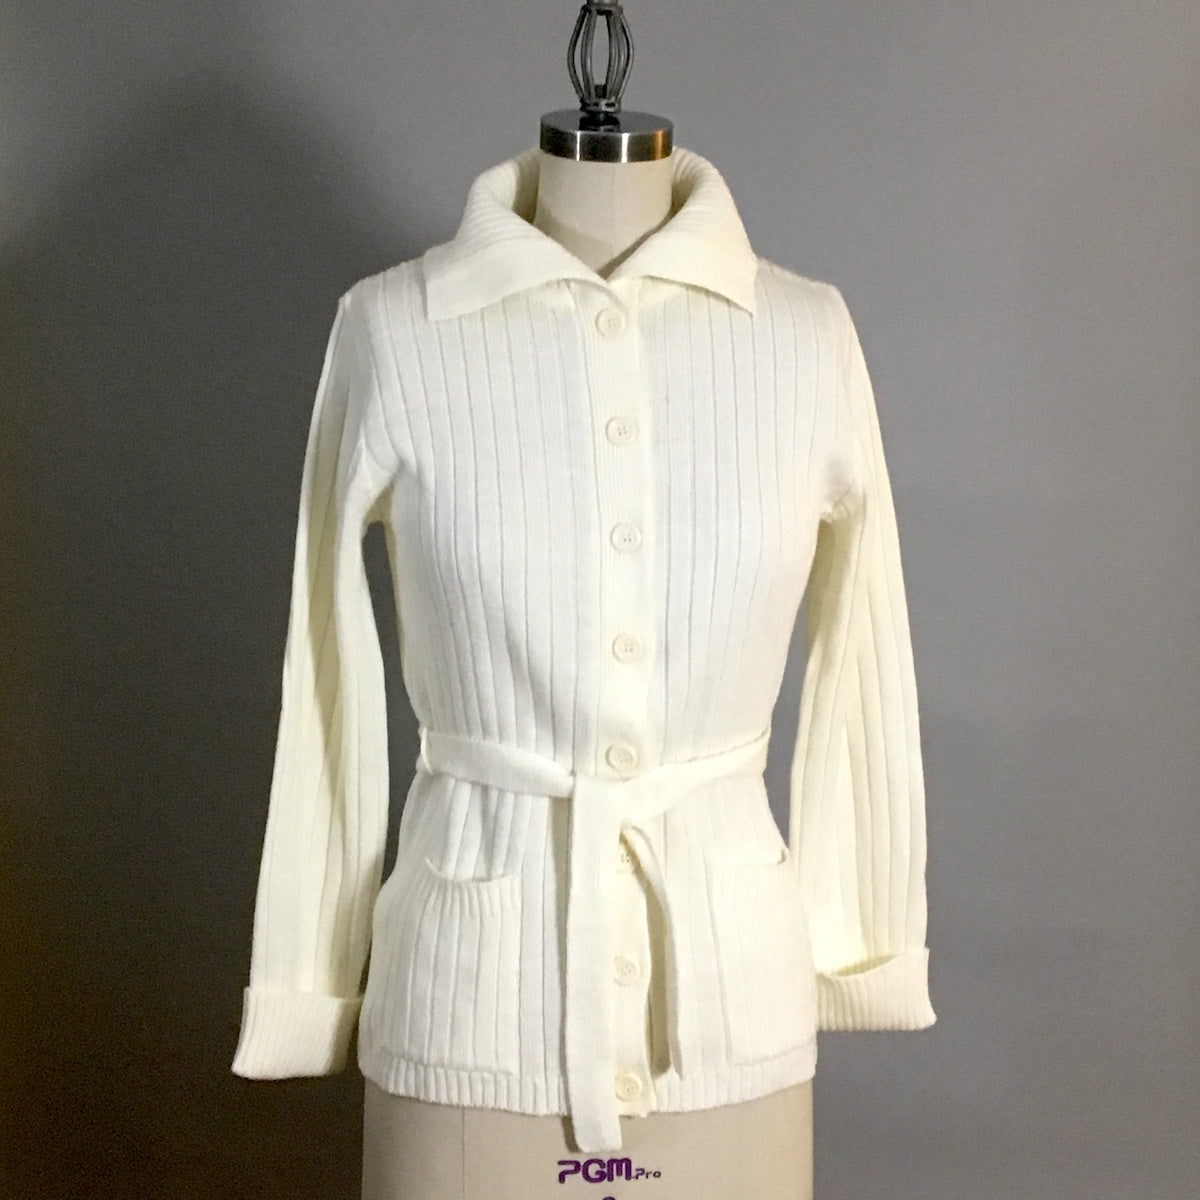 Cream cardigan tunic sweater - Bronson of CA - 1970s vintage - XS